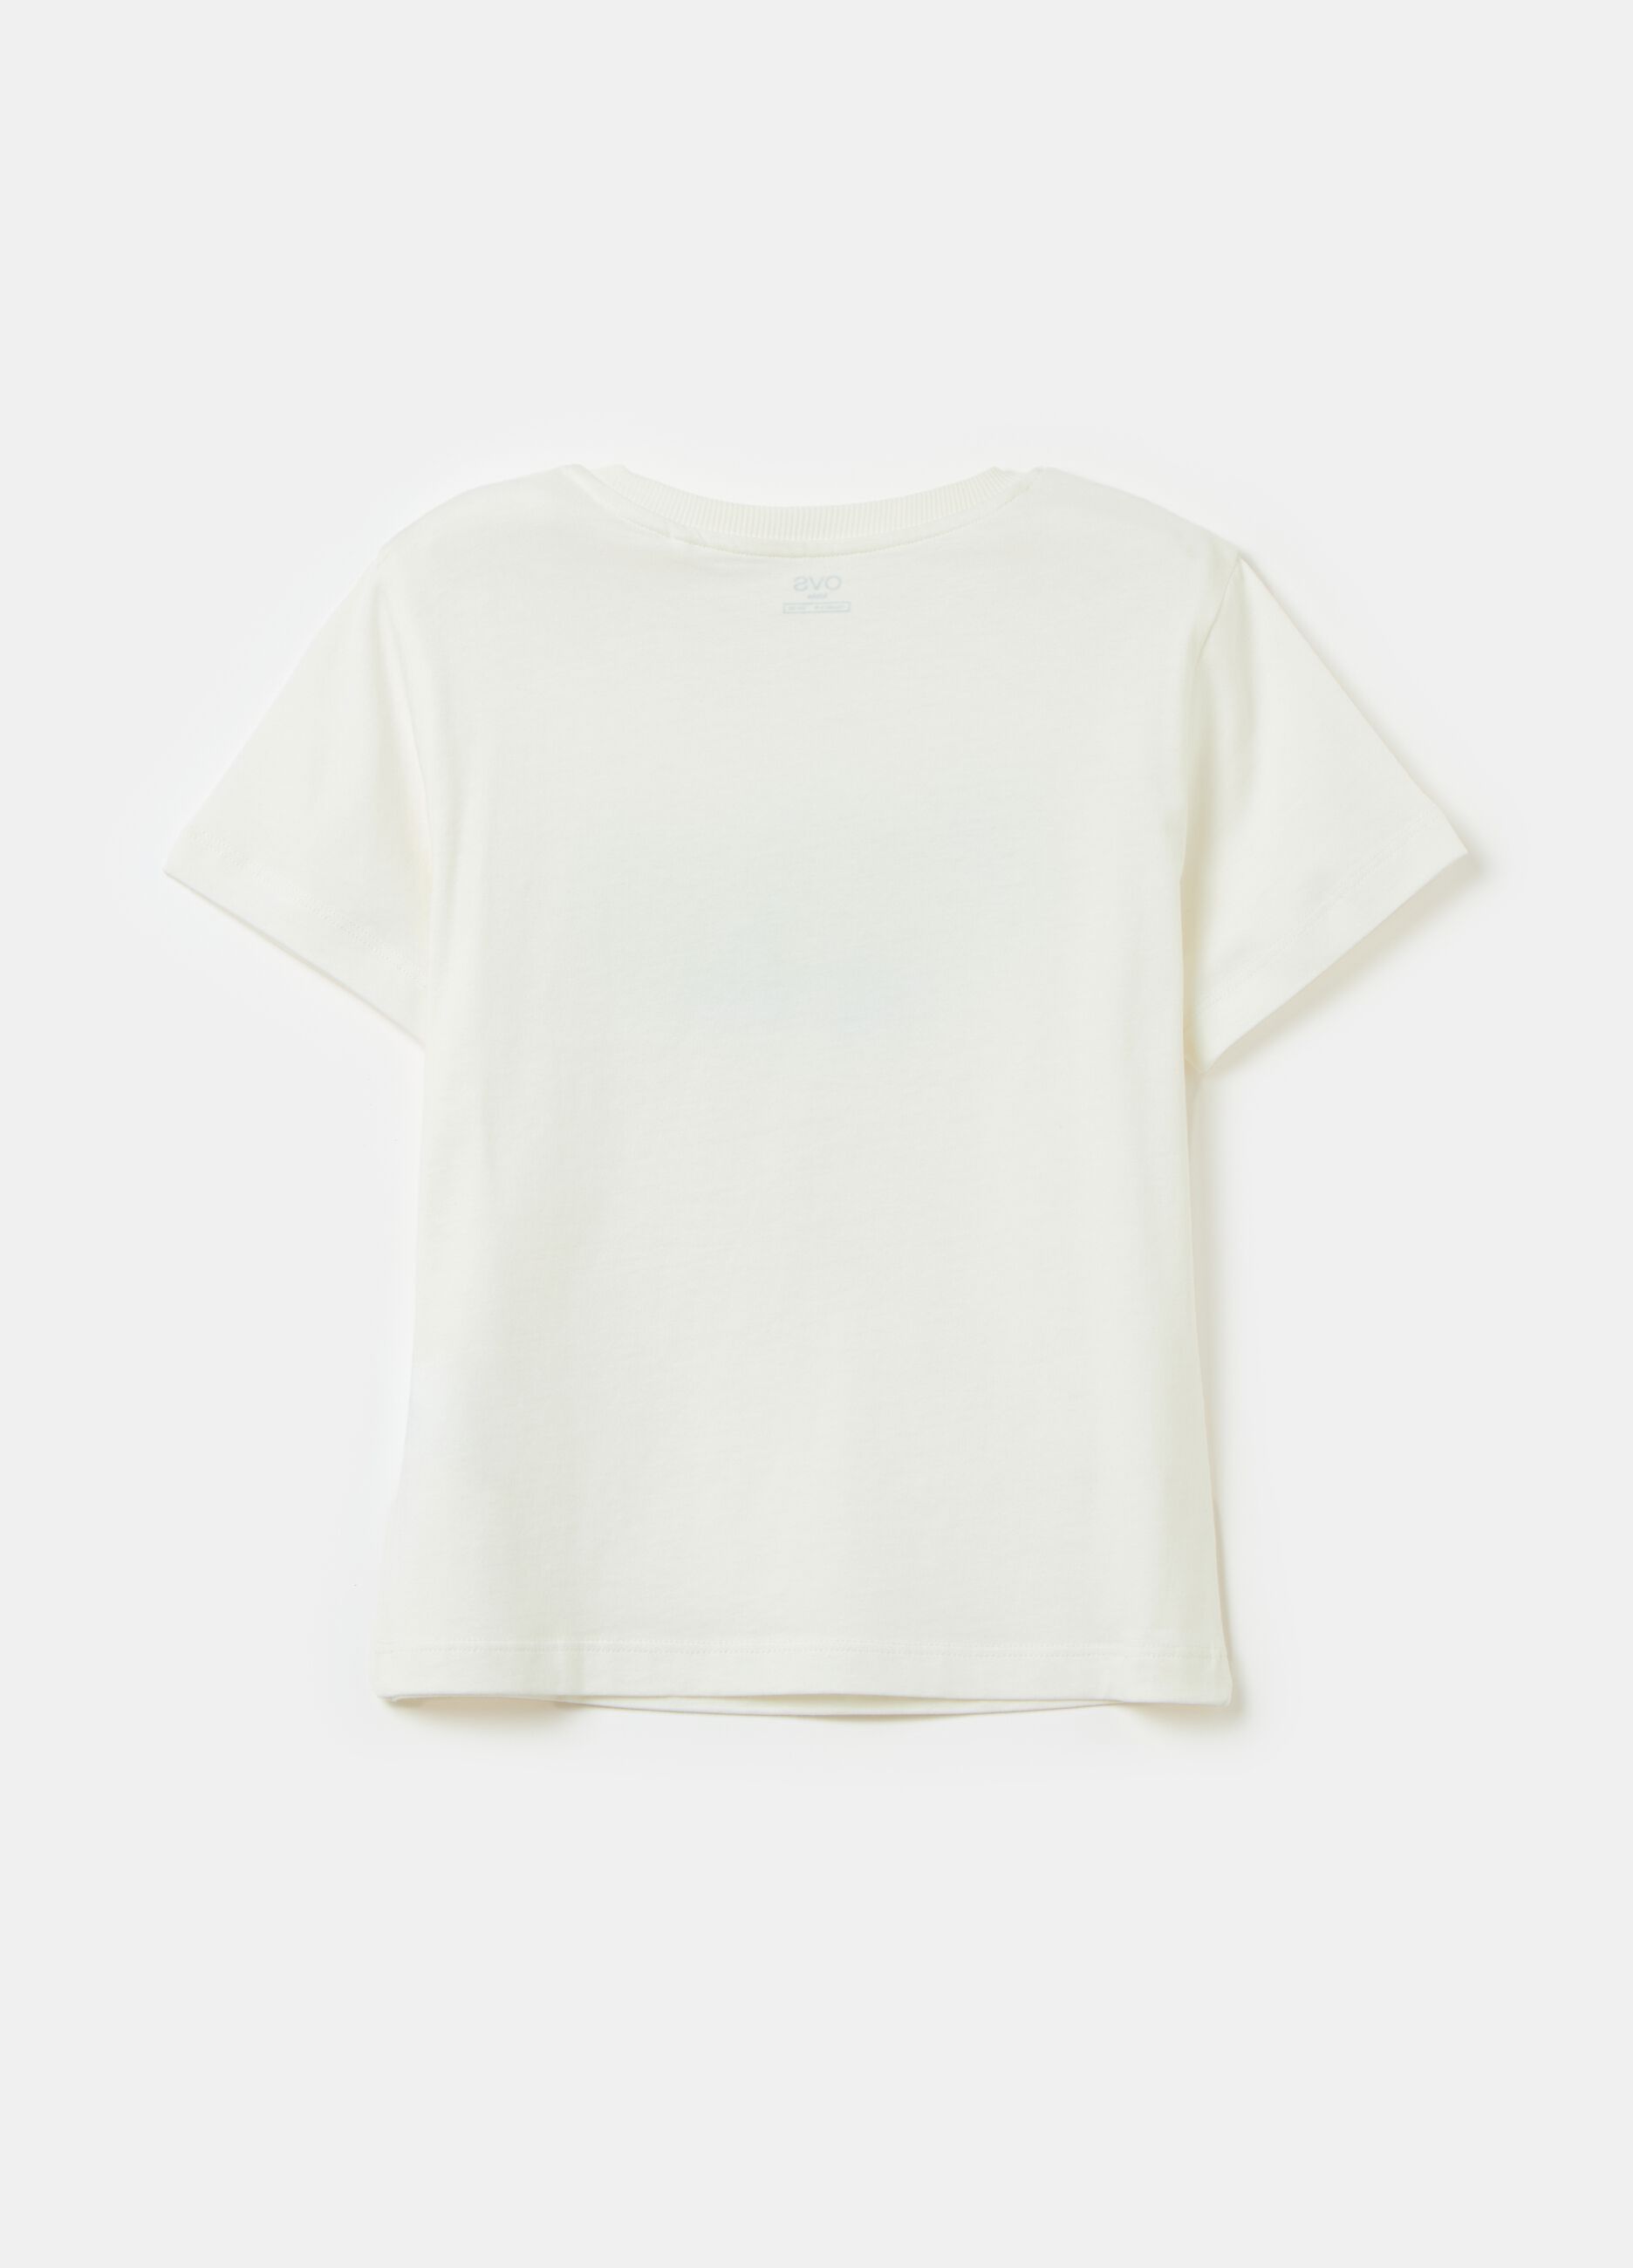 Printed cotton degradé T-shirt